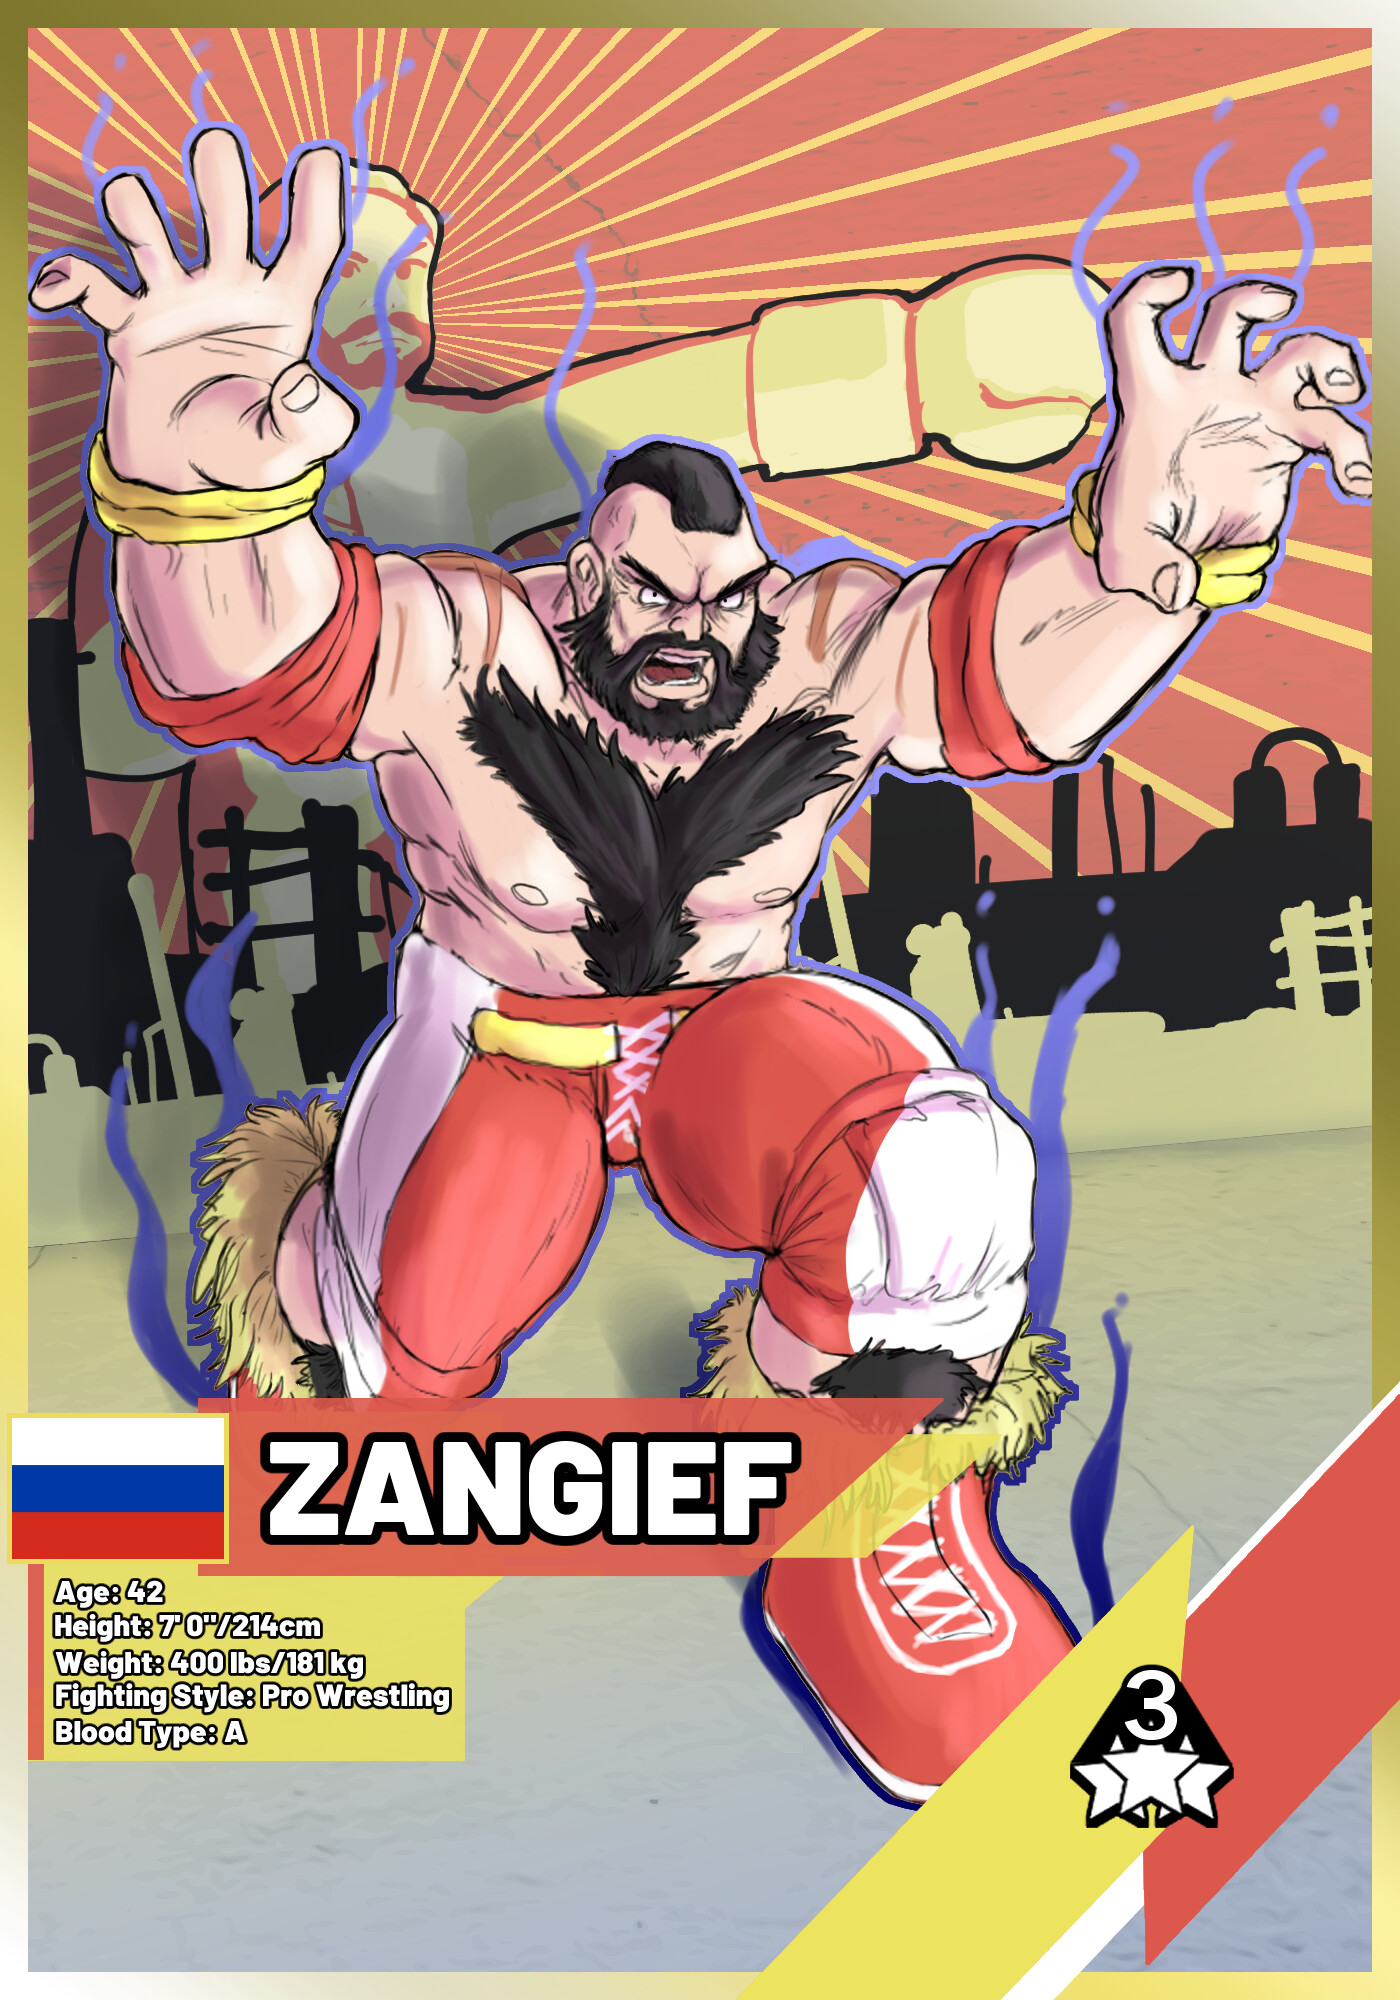 ArtStation - Zangief - Street Fighter